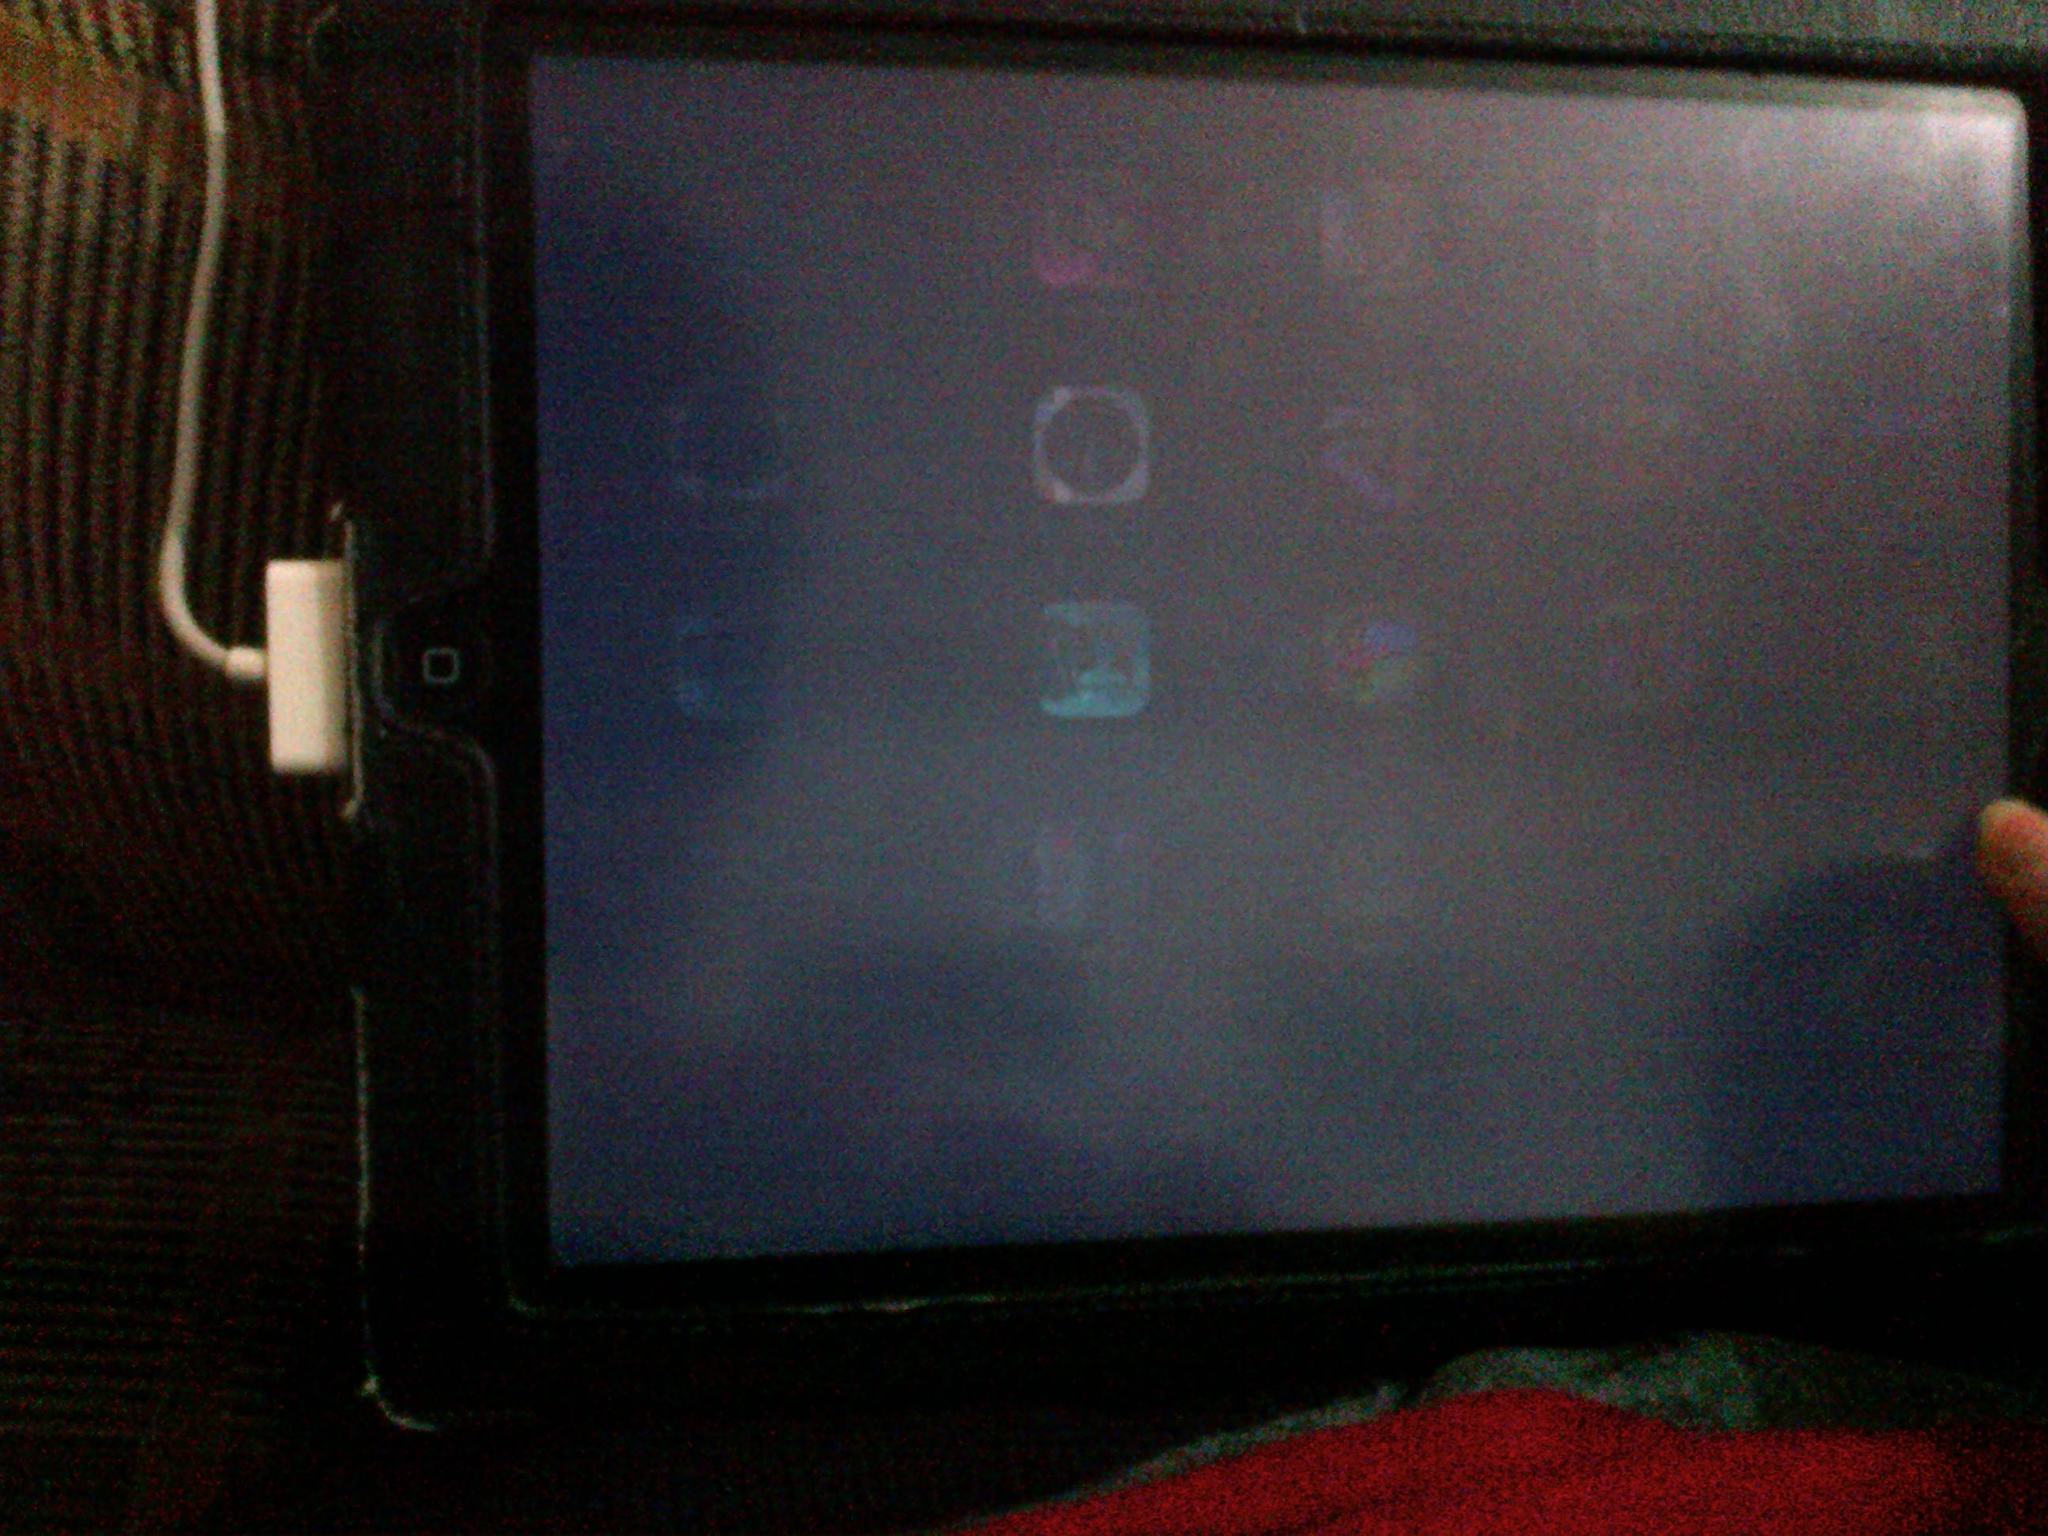  iPad Ekran Kararması (?)